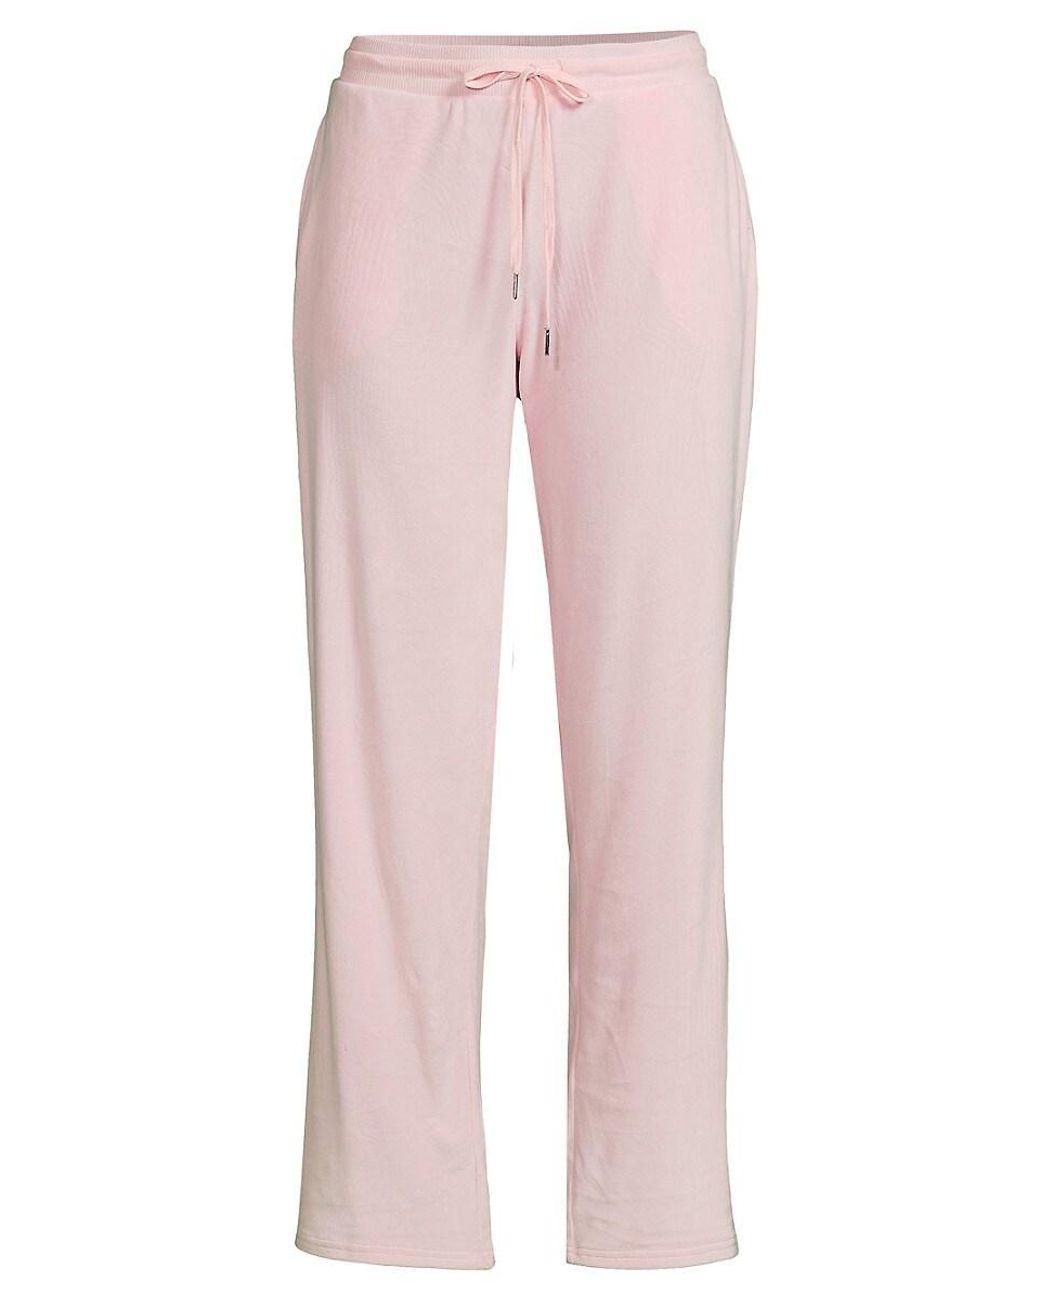 Juicy Couture Embellished Logo Drawstring Lounge Pants in Pink